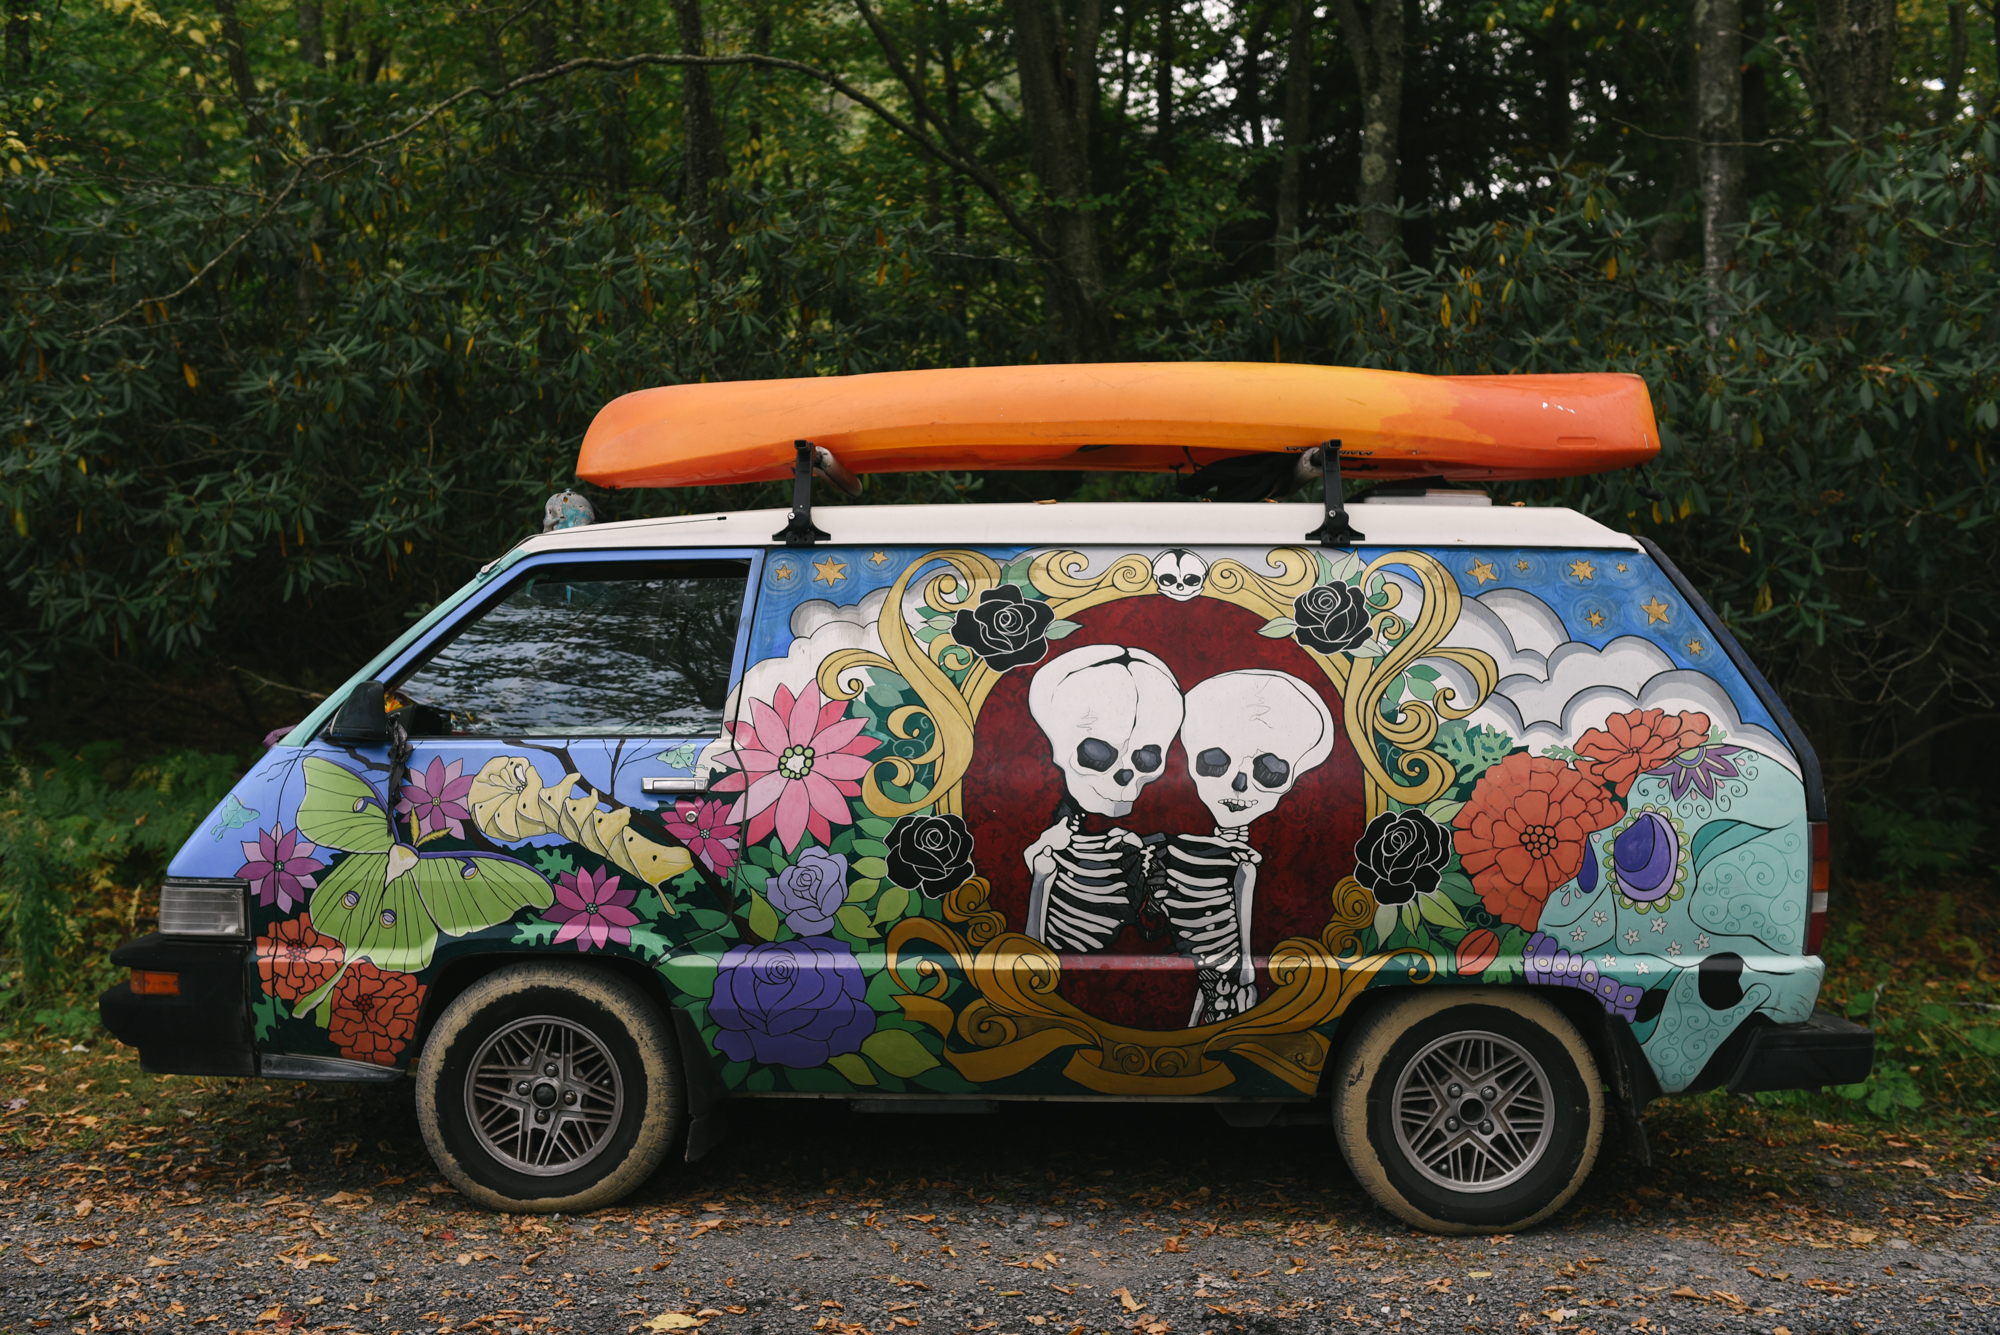  Mountain Wedding, Outdoors, Rustic, West Virginia, Maryland Wedding Photographer, DIY, Casual, Colorful painted van, painting of skeletons on van 